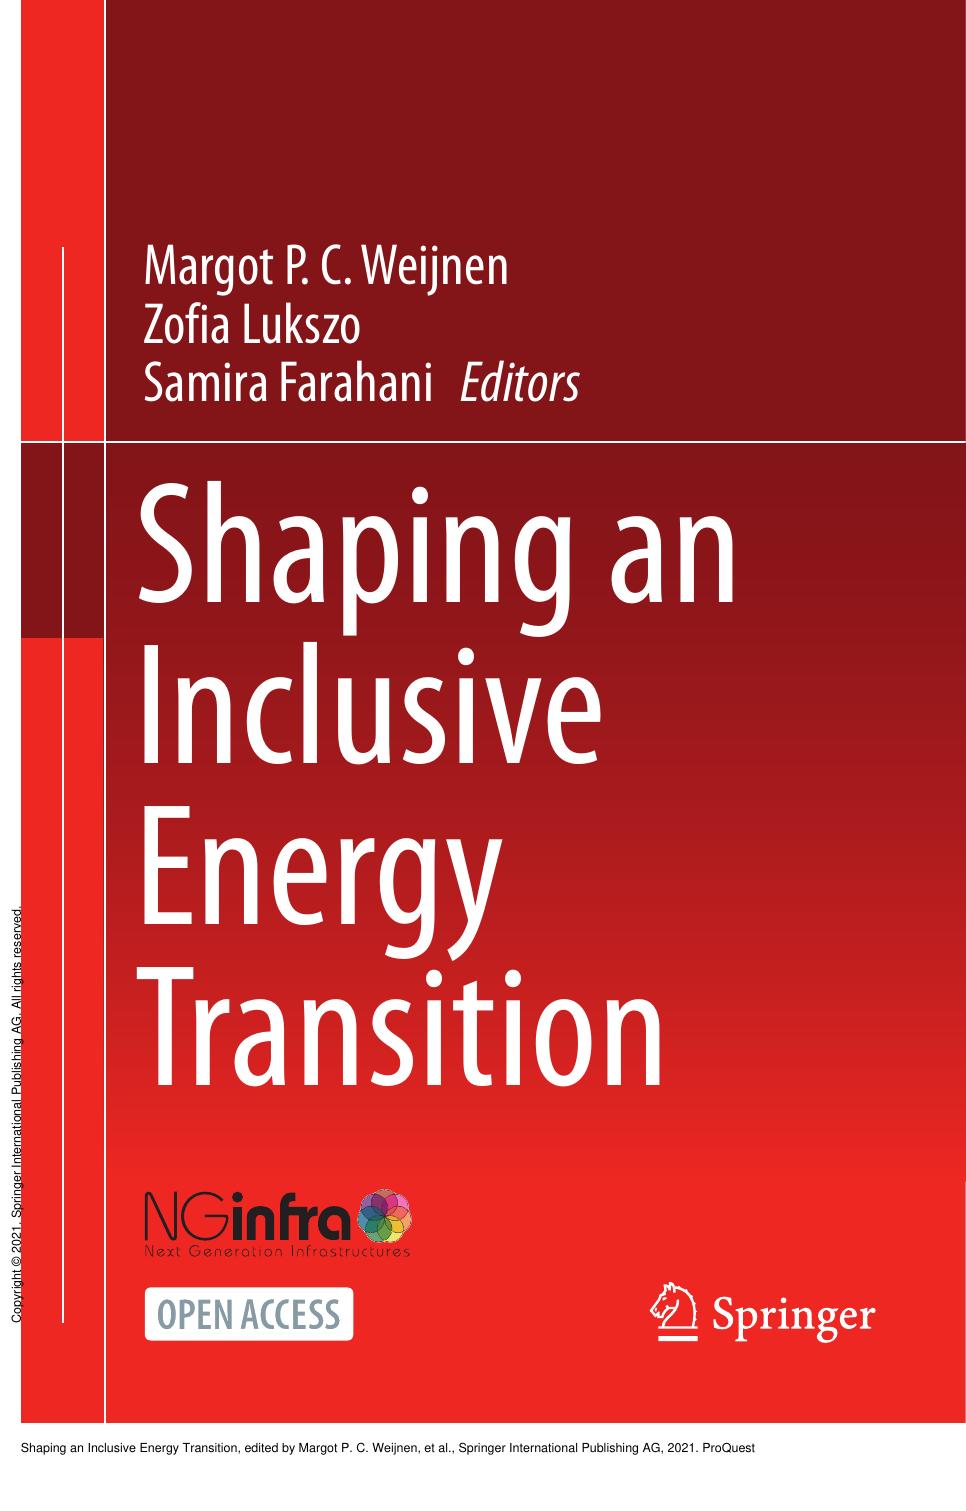 Shaping an Inclusive Energy Transition by Margot P. C. Weijnen; Zofia Lukszo; Samira Farahani